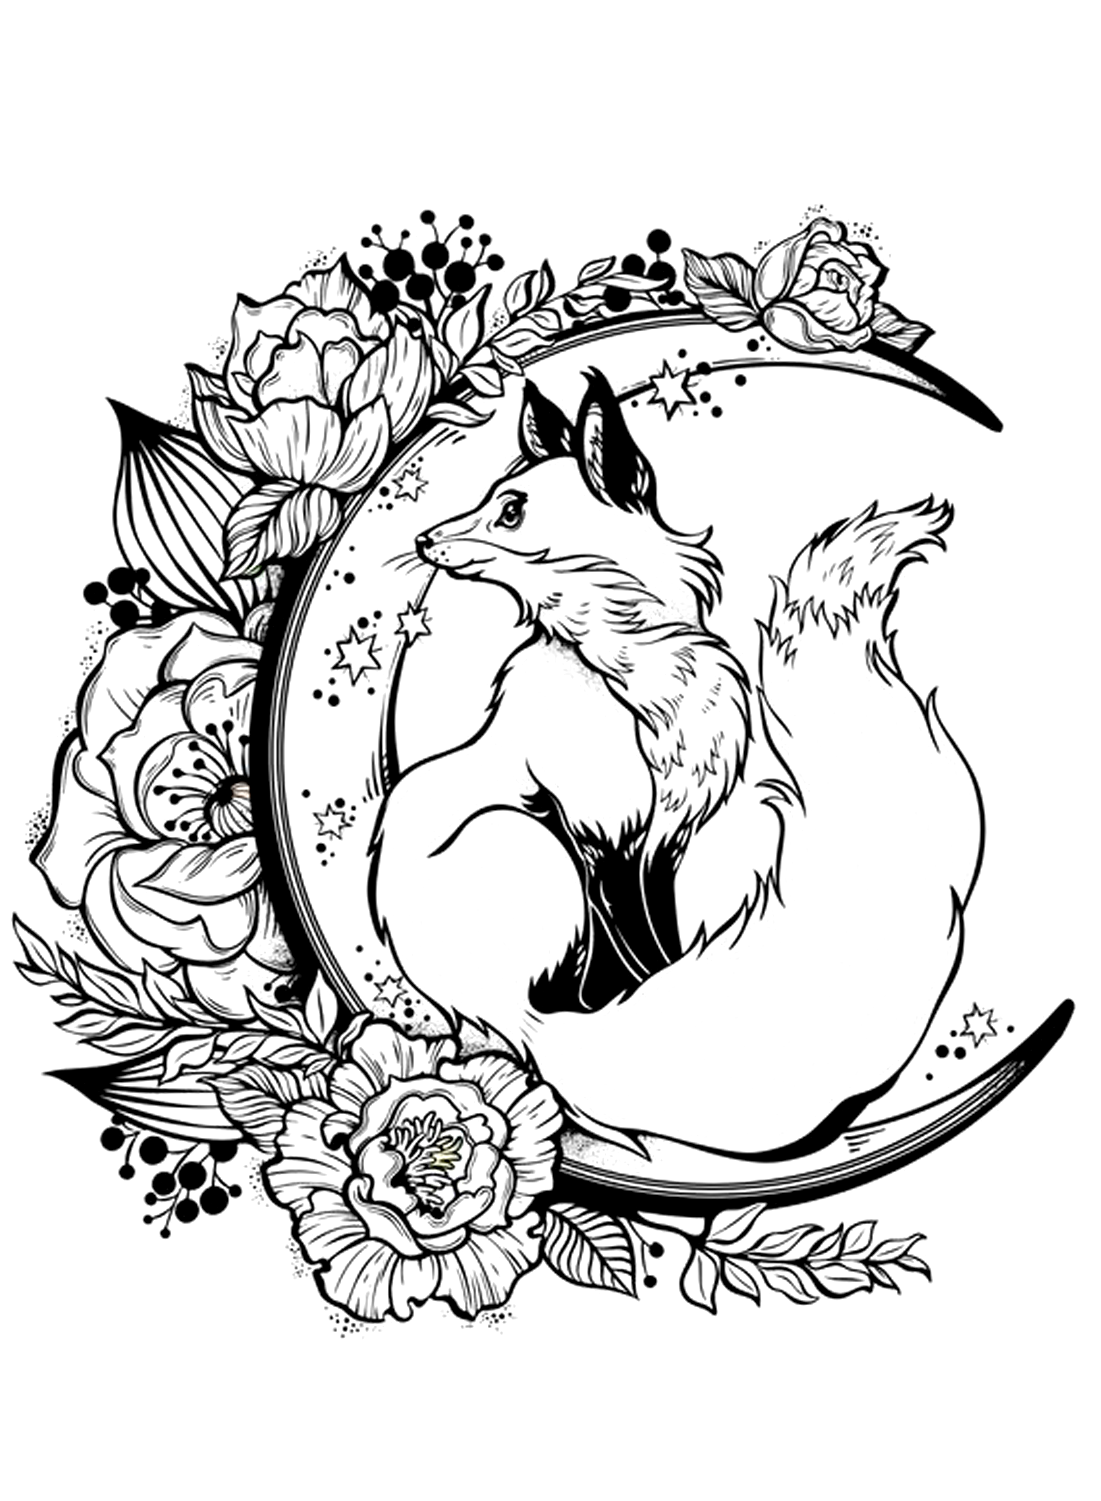 Folha para colorir de raposa e flores da Fox